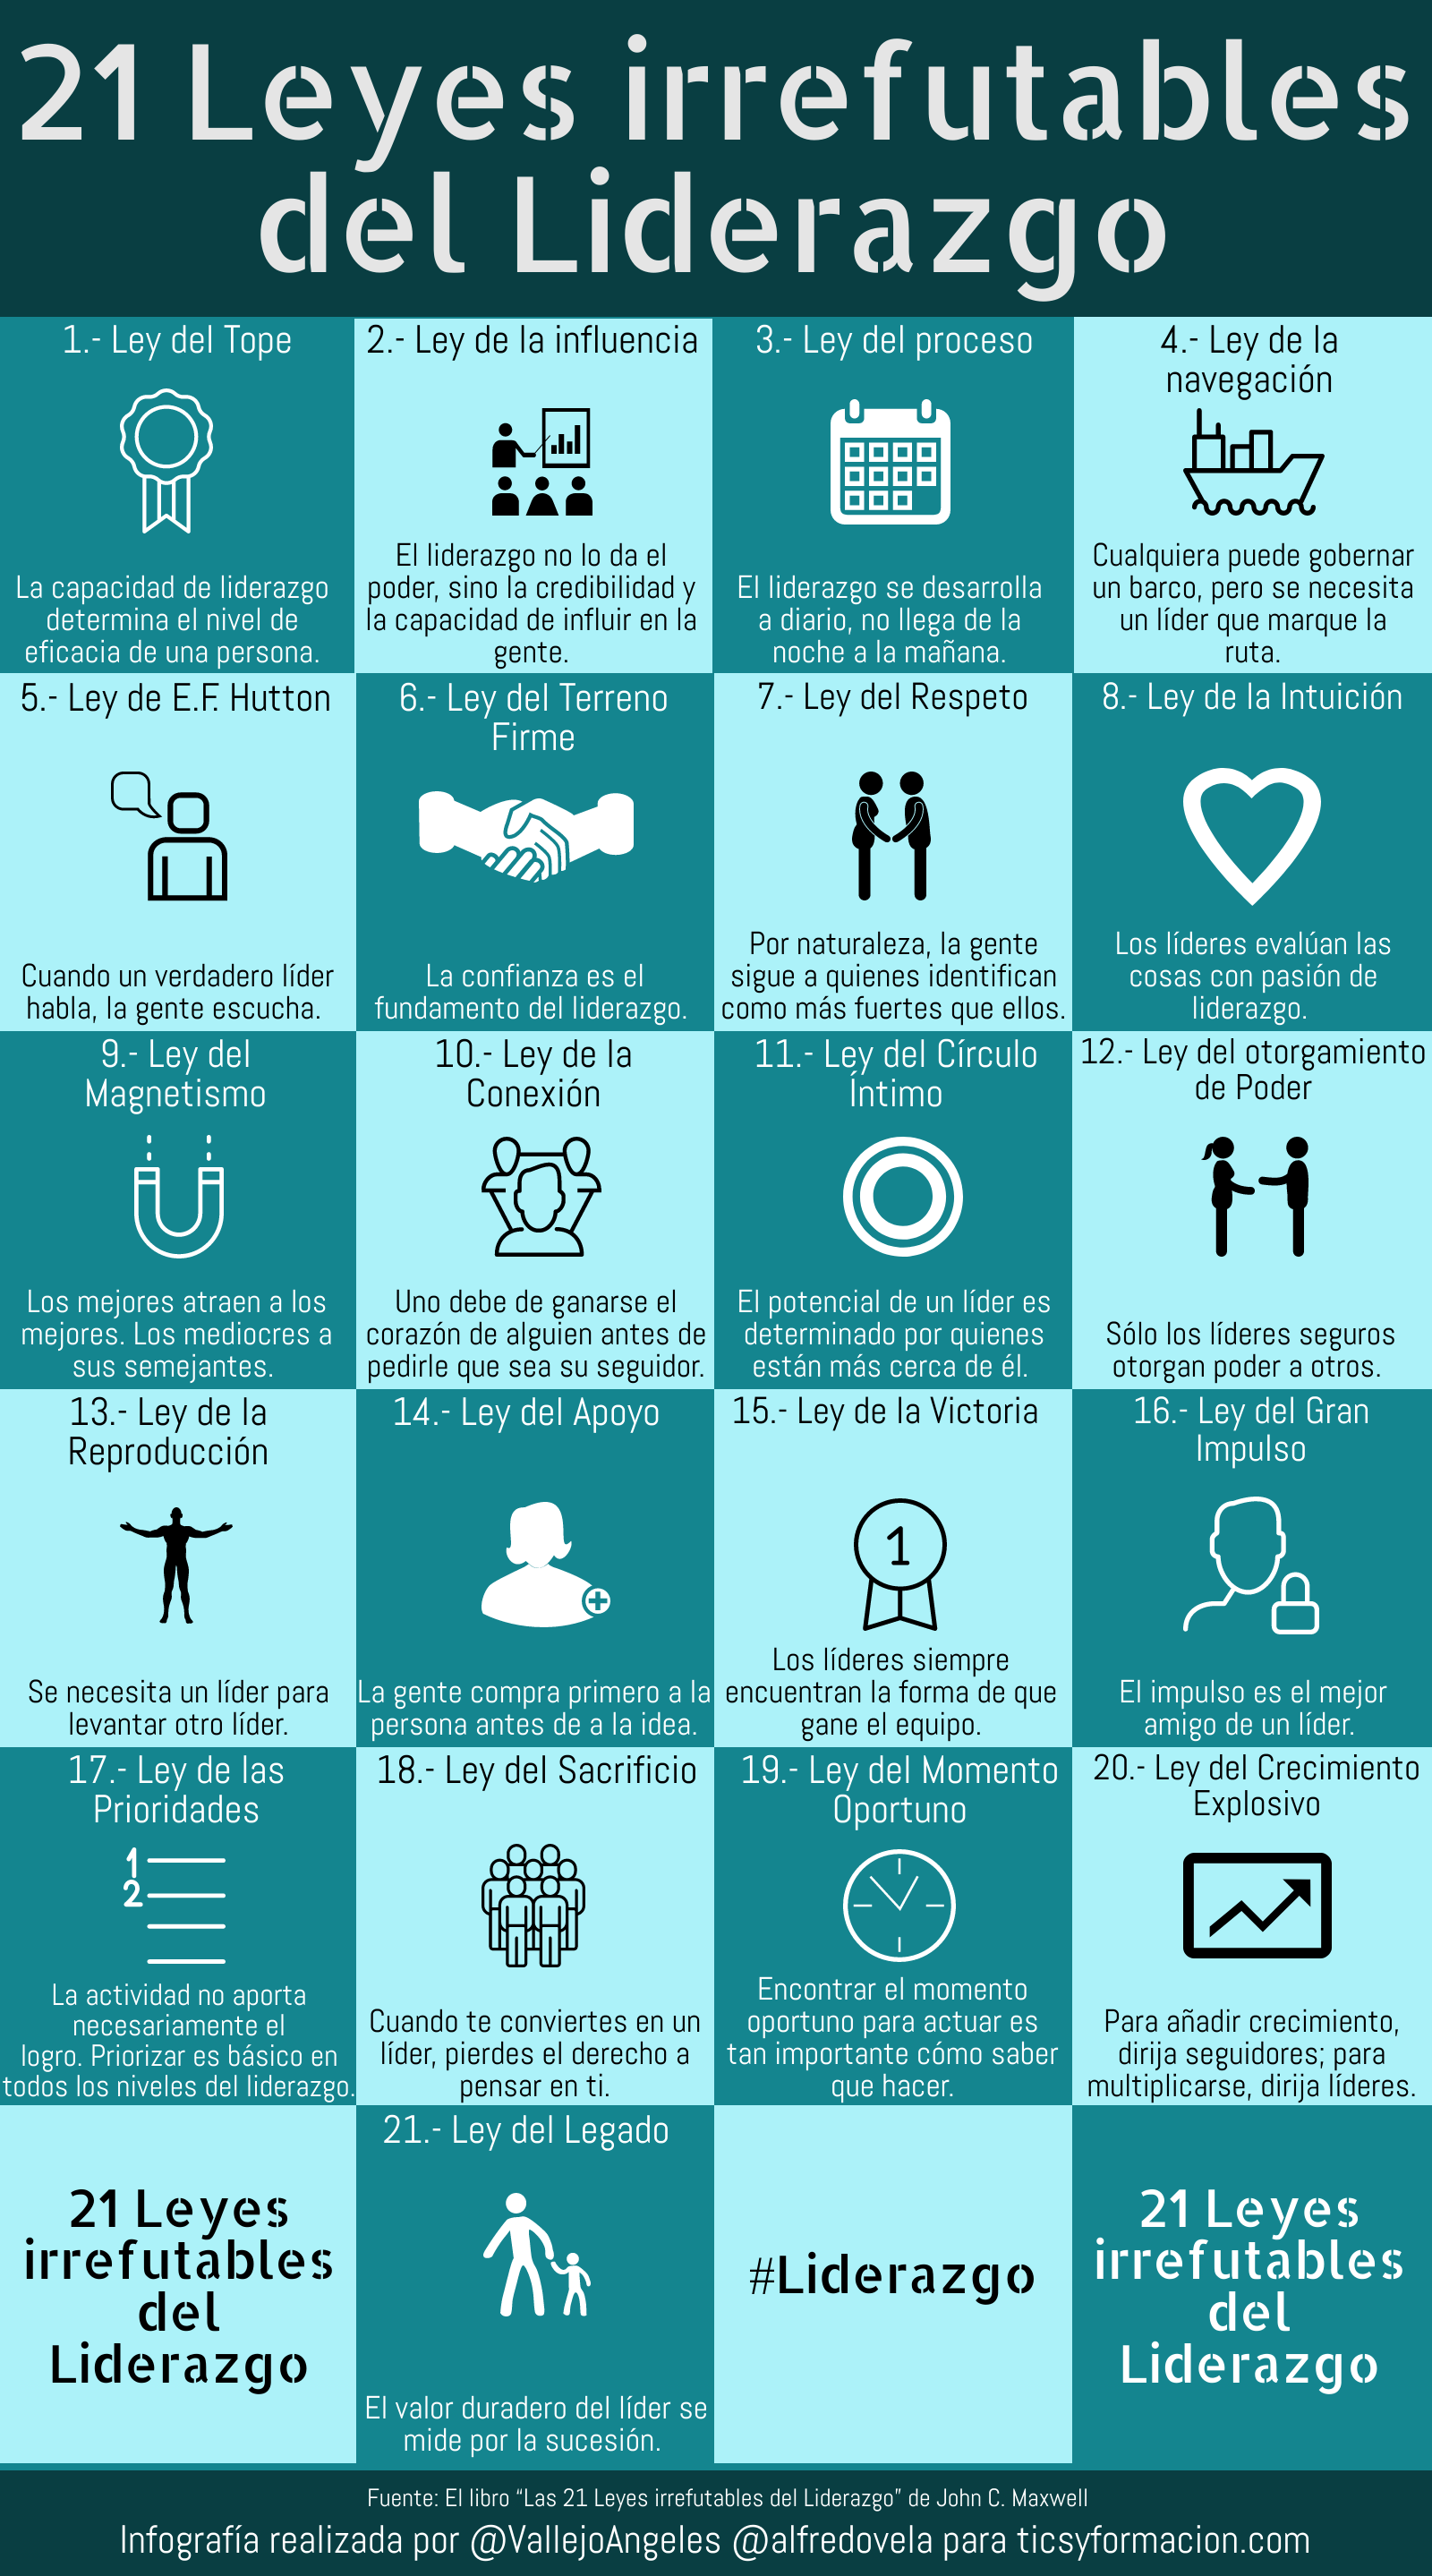 21 leyes irrefutables del Liderazgo #infografia #leadership #liderazgo